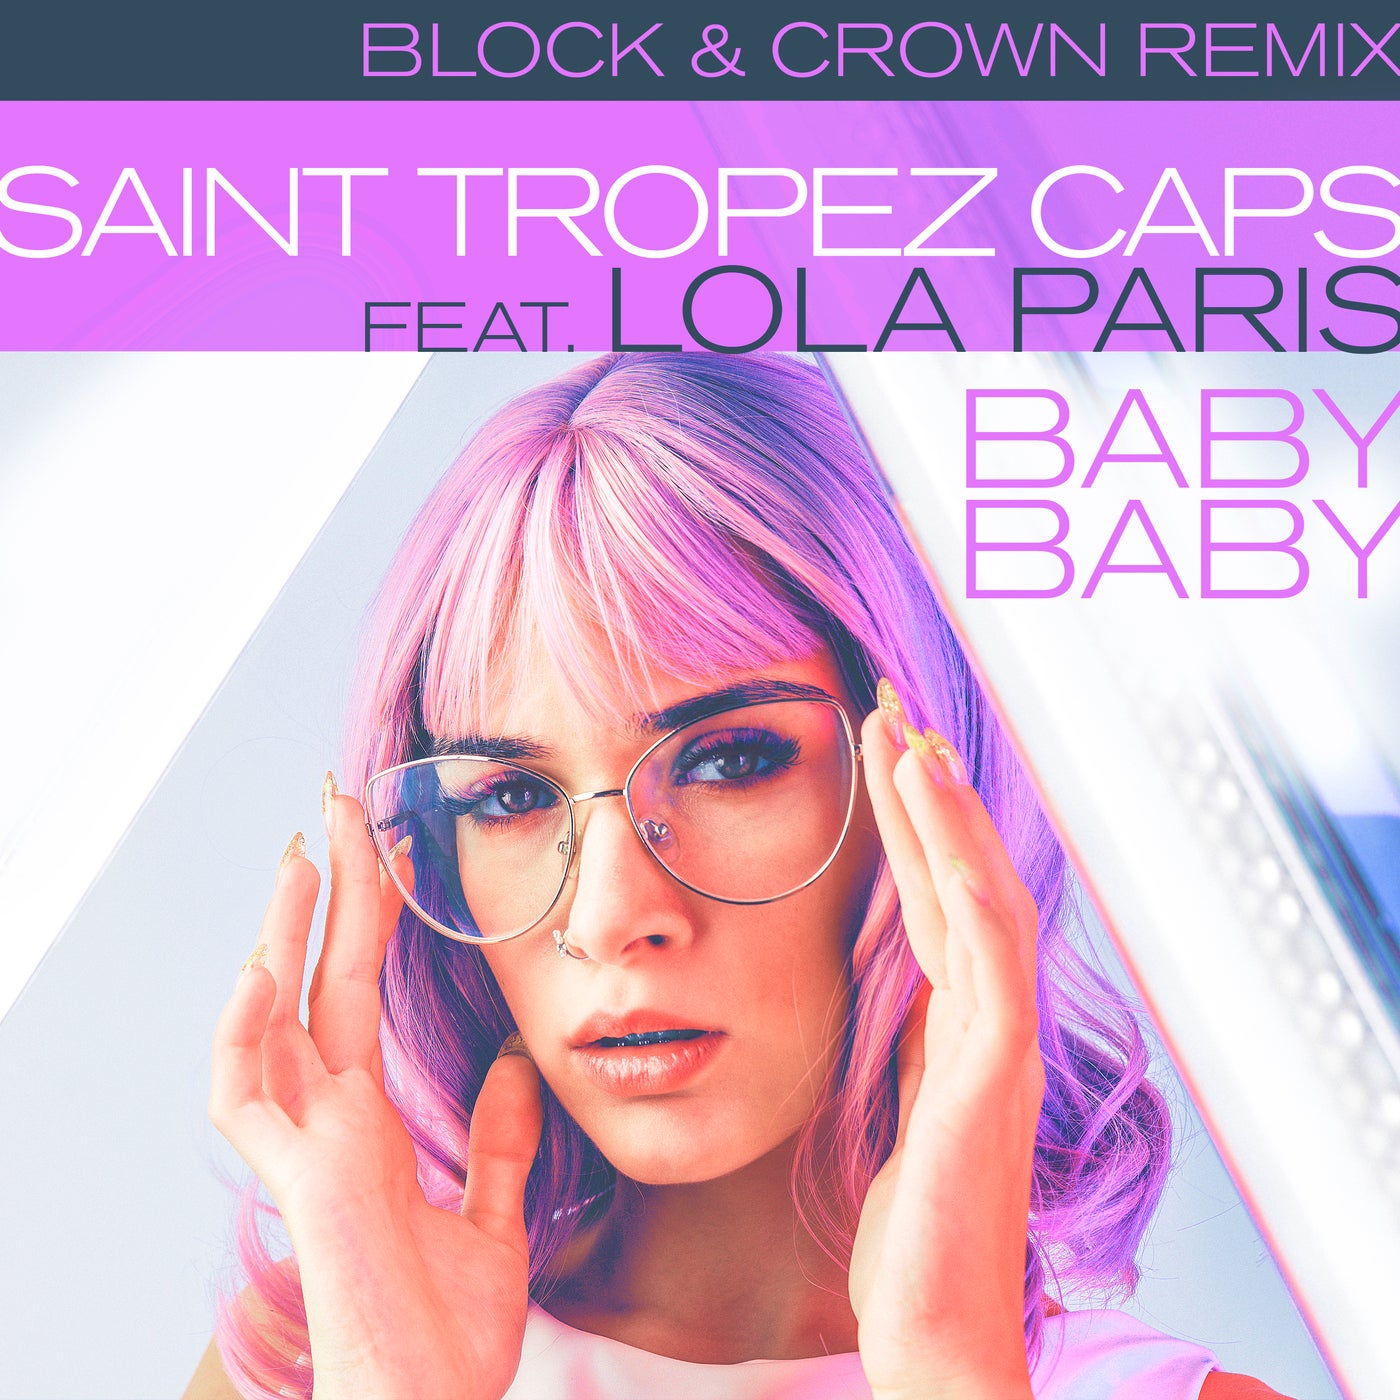 Baby Baby (Block & Crown Remix)